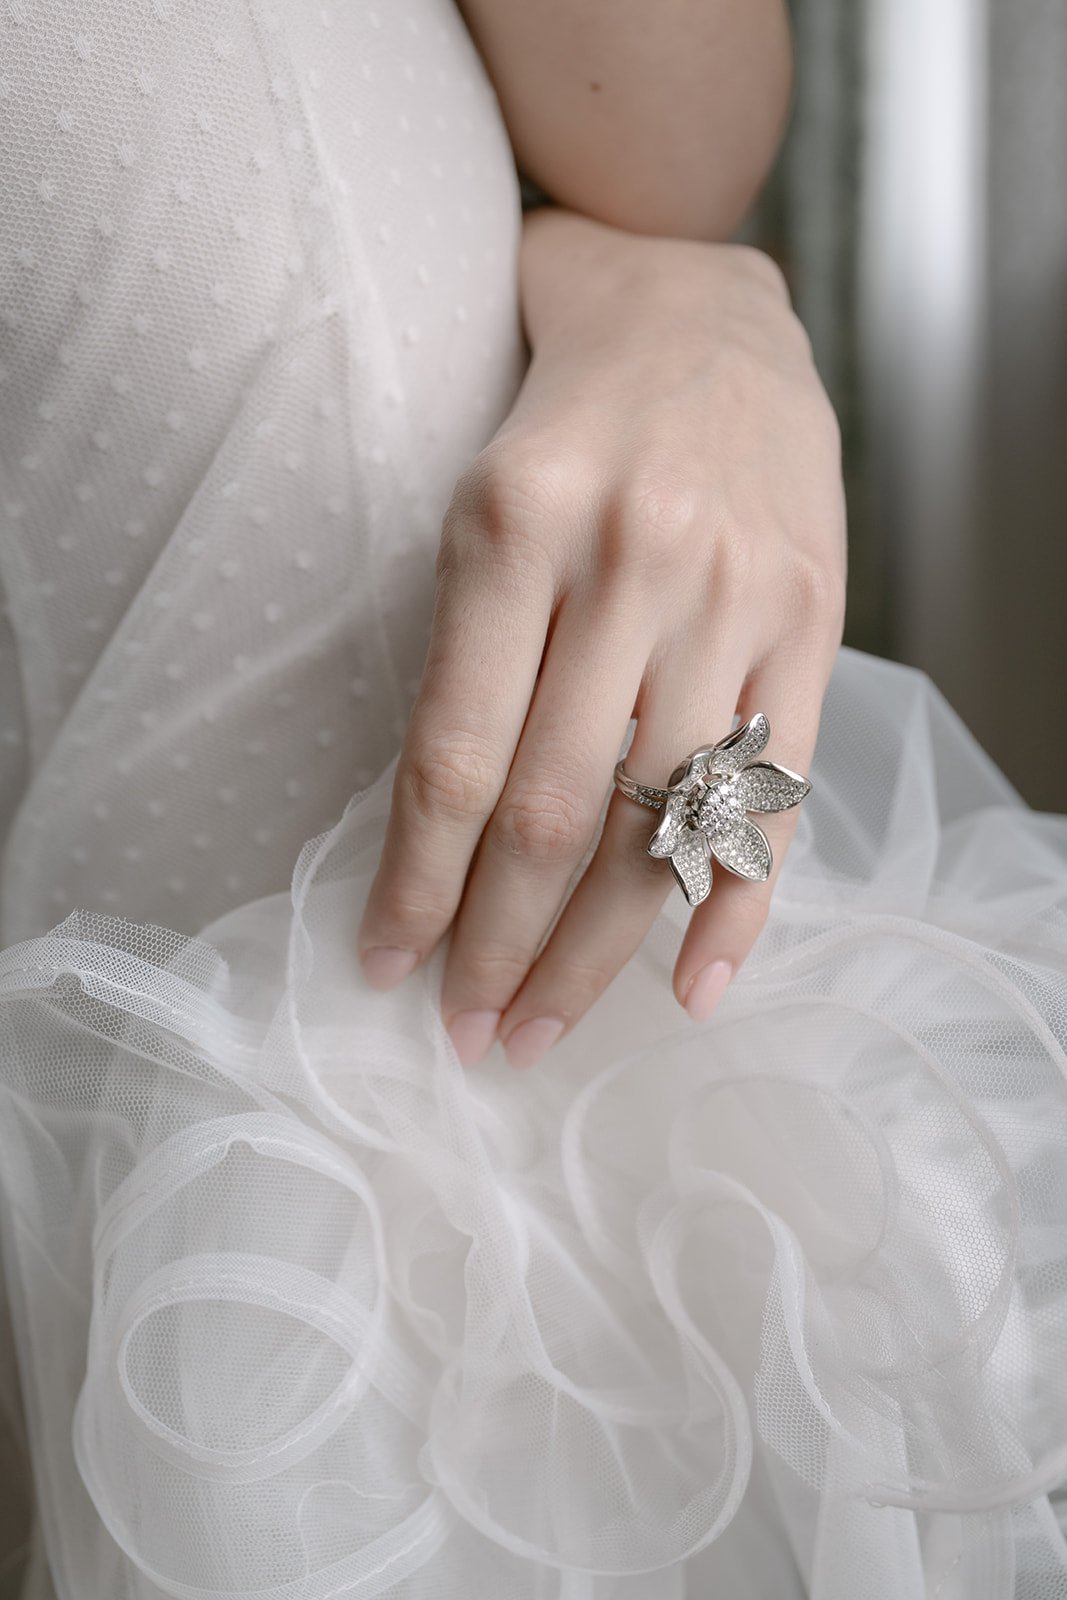 wedding ring - detail -wedding photographer italy.jpg